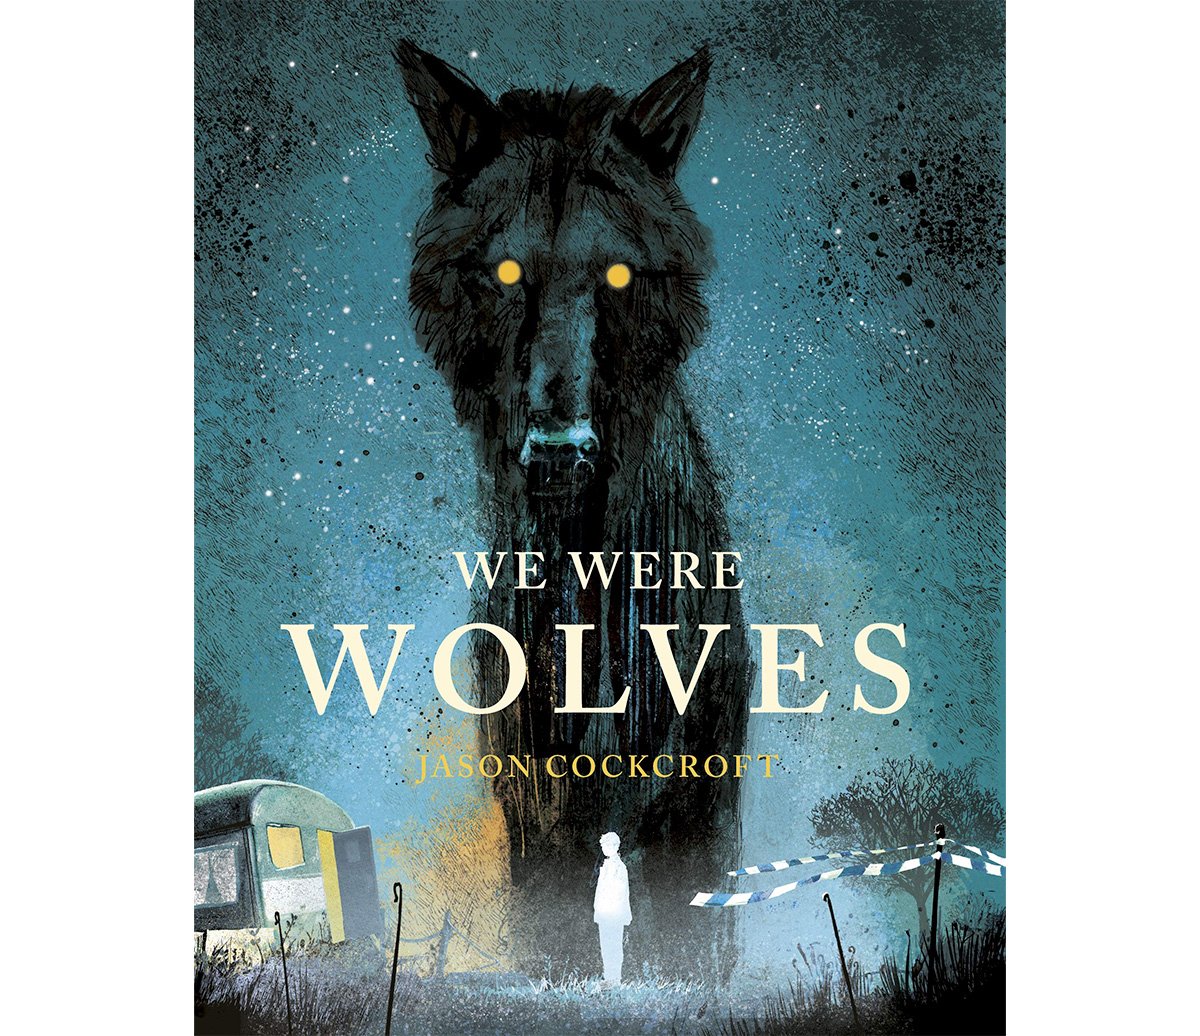 jason-cockcroft-wolves-cover.jpg